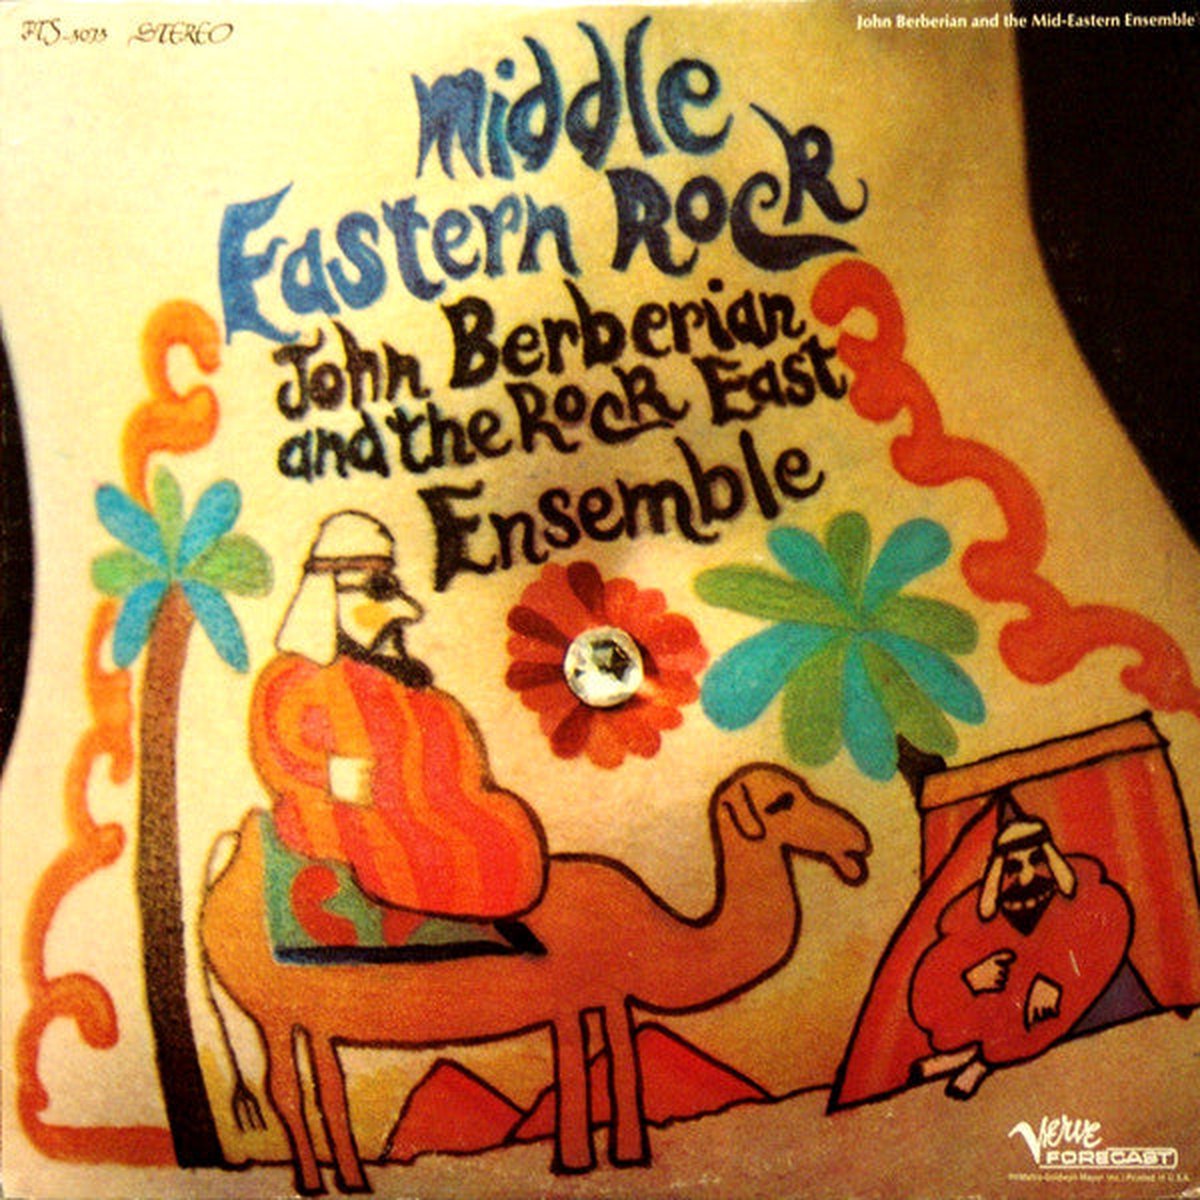 John Berberian & The Rock East East Ensemble - Middle Eastern Rock (Coloured Vinyl)